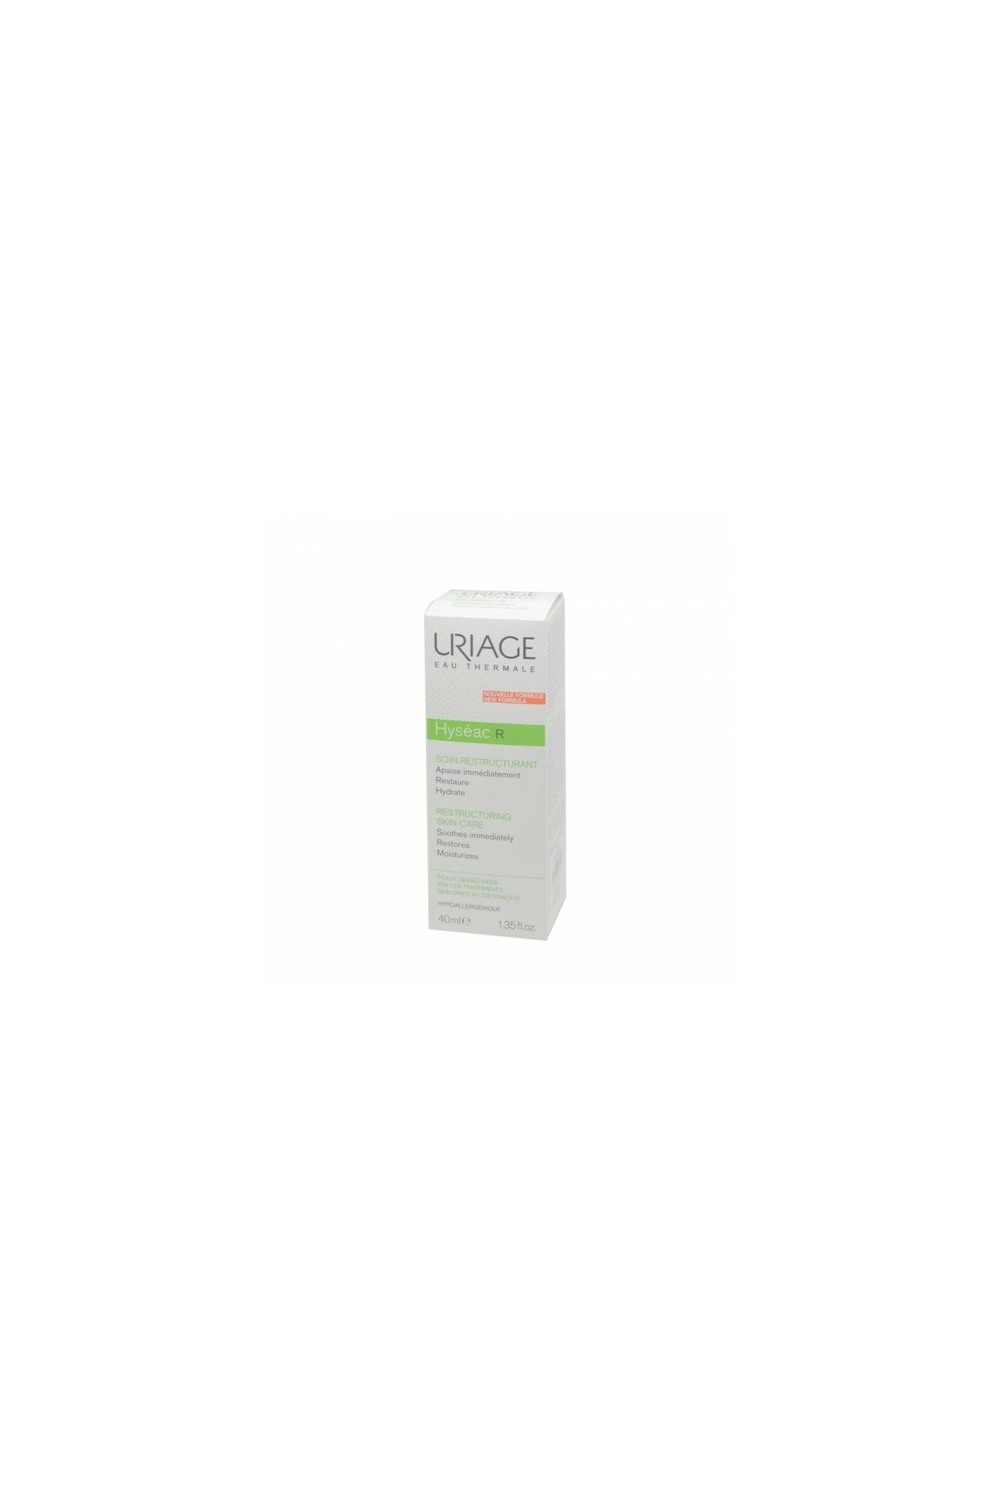 Uriage Hyséac R Restructuring Skin-Care 40ml